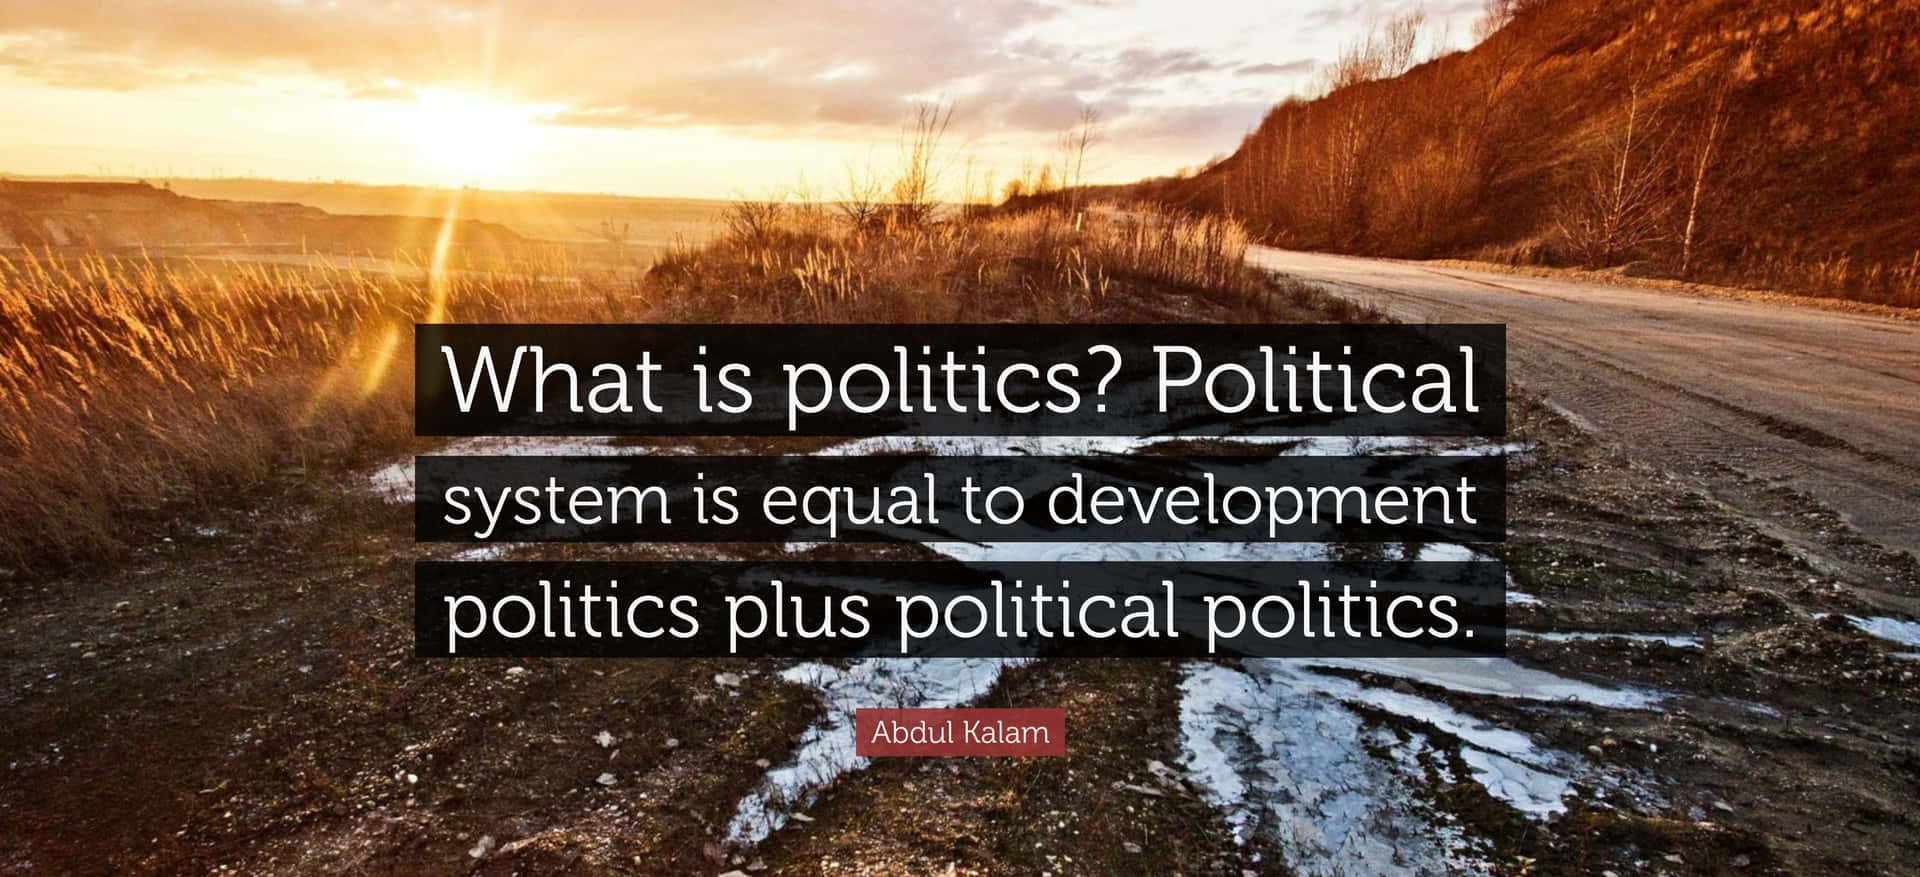 What Is Politics Political?